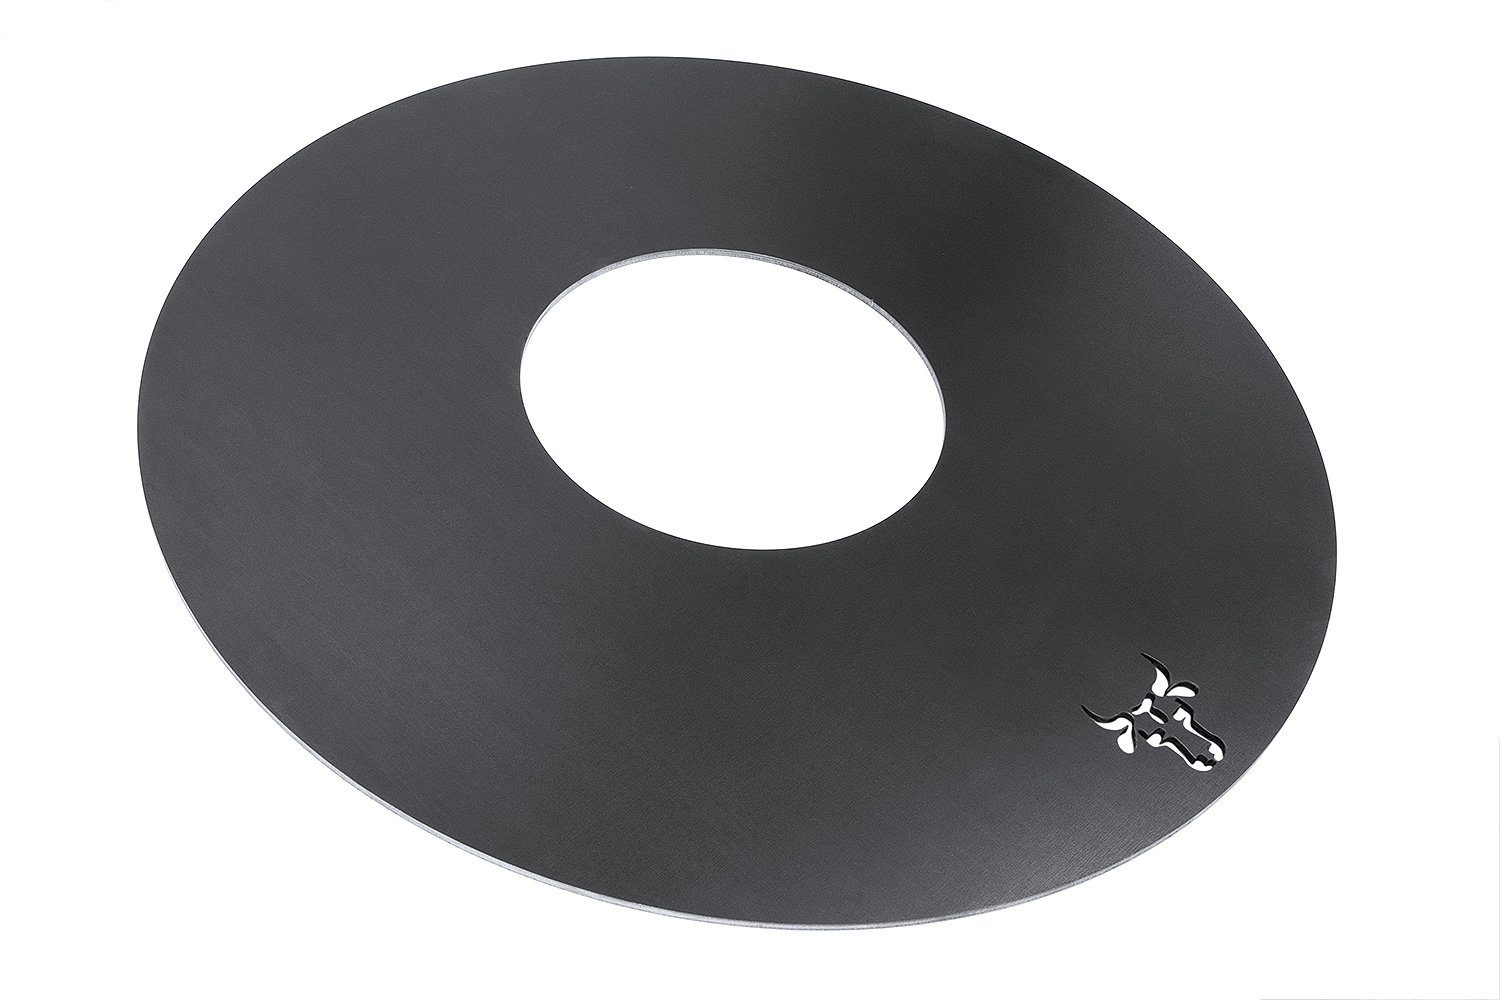 tuning-art Grillplatte GR01-55 Grillring Feuerplatte BBQ-Platte für Plancha 55cm Kugelgrill